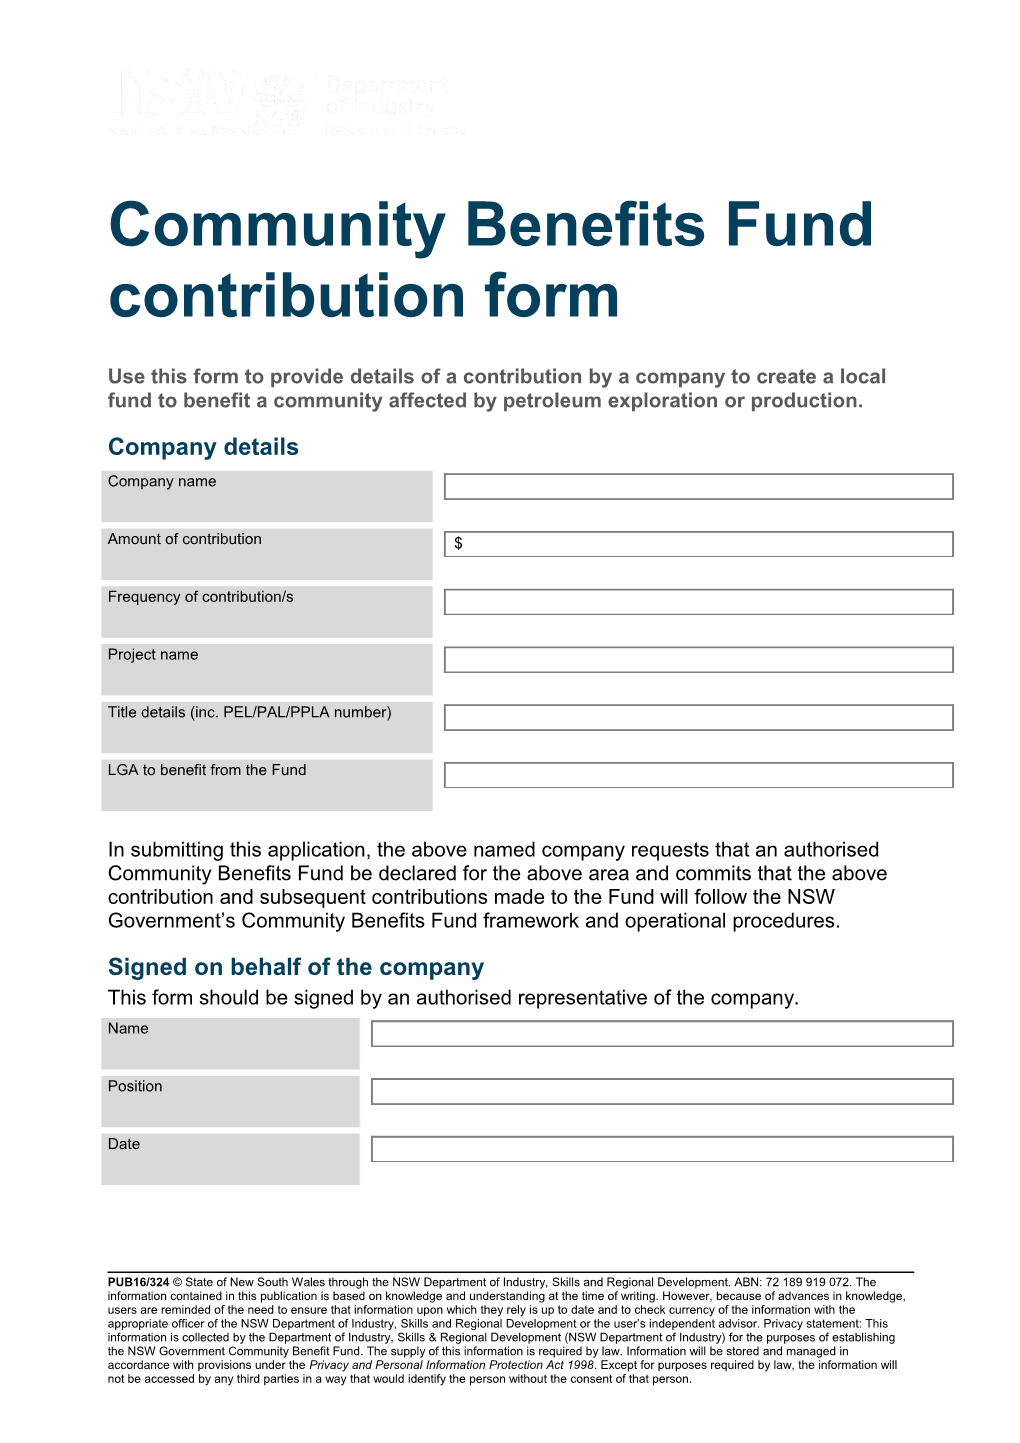 Community Benefits Fund Contribution Form